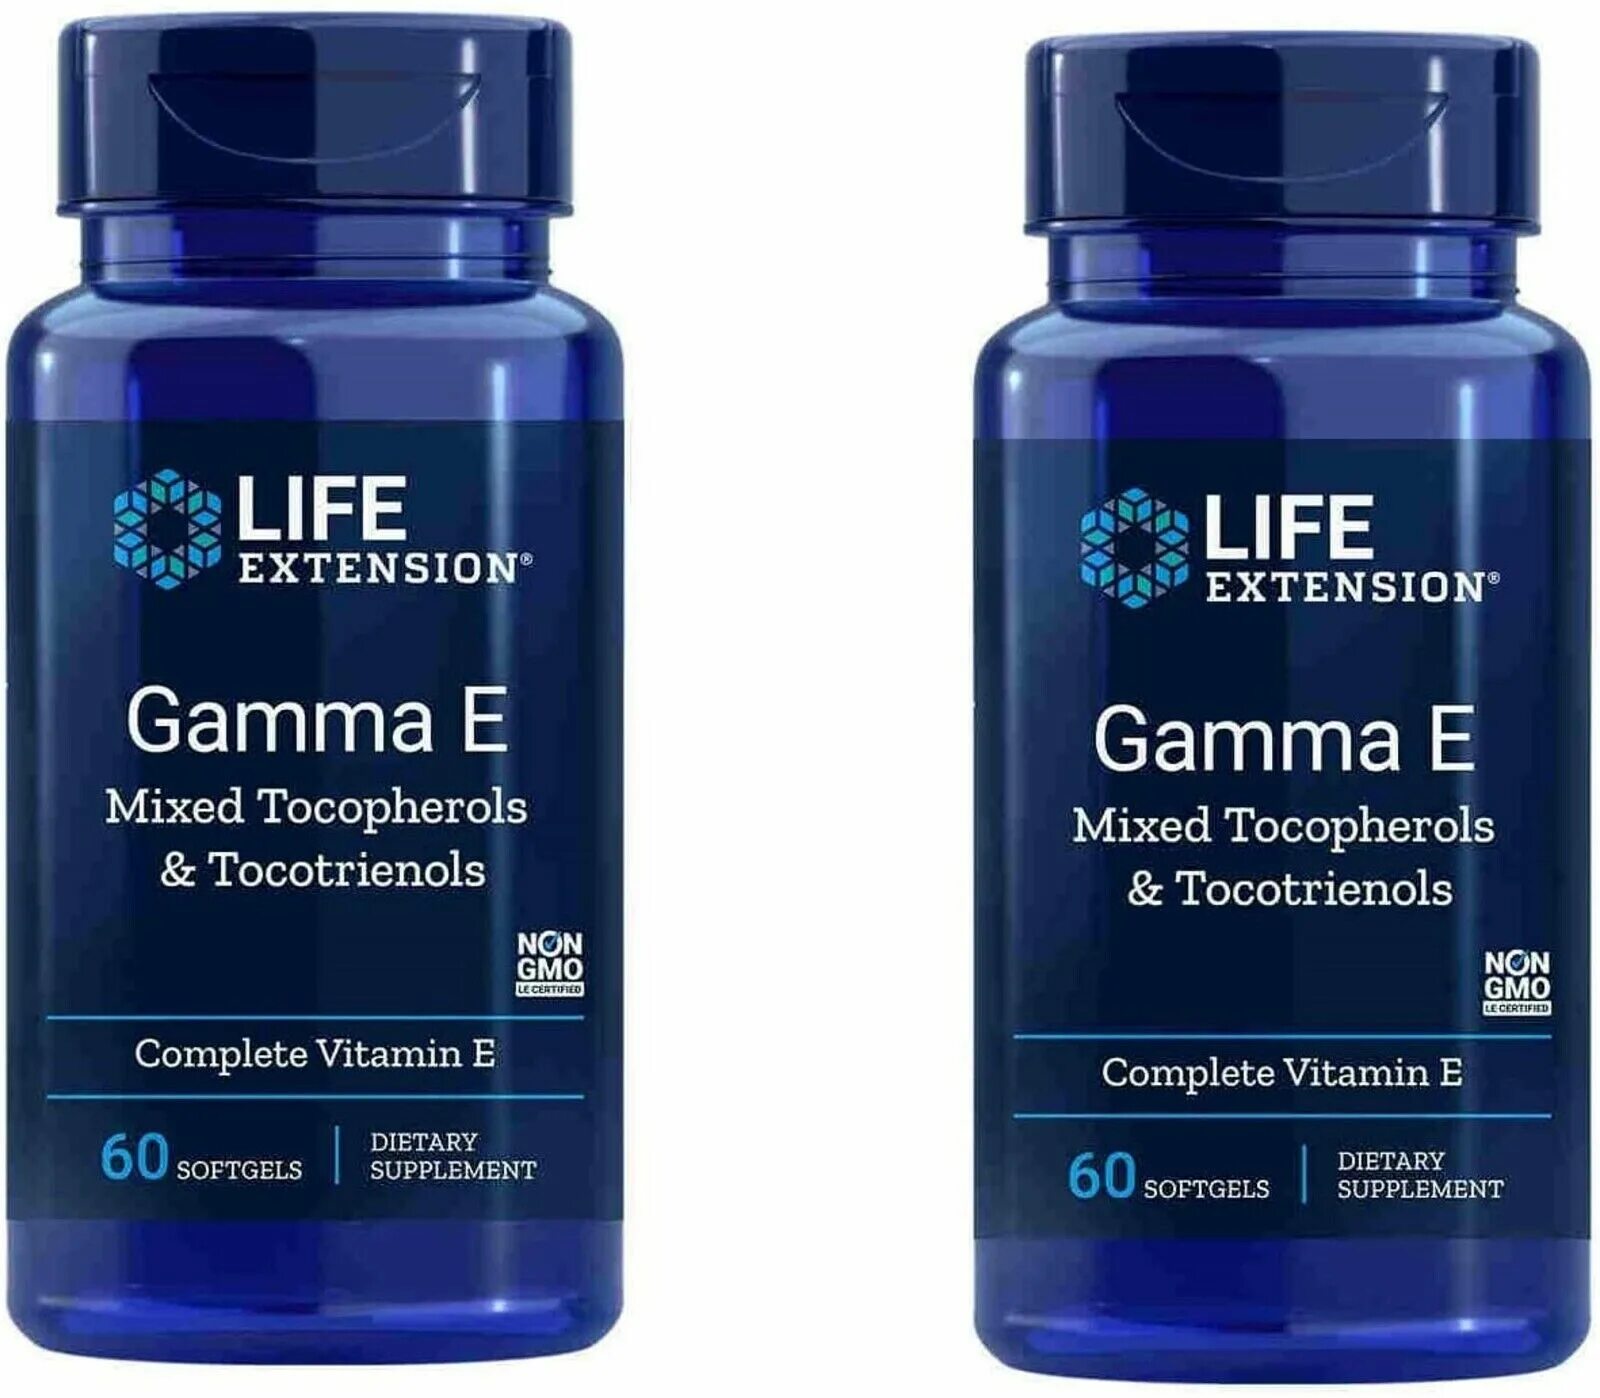 Gamma e Life Extension. Laiv gama. Токотриенол Life Extension абсорб. Life Extension Lithium. E extensions